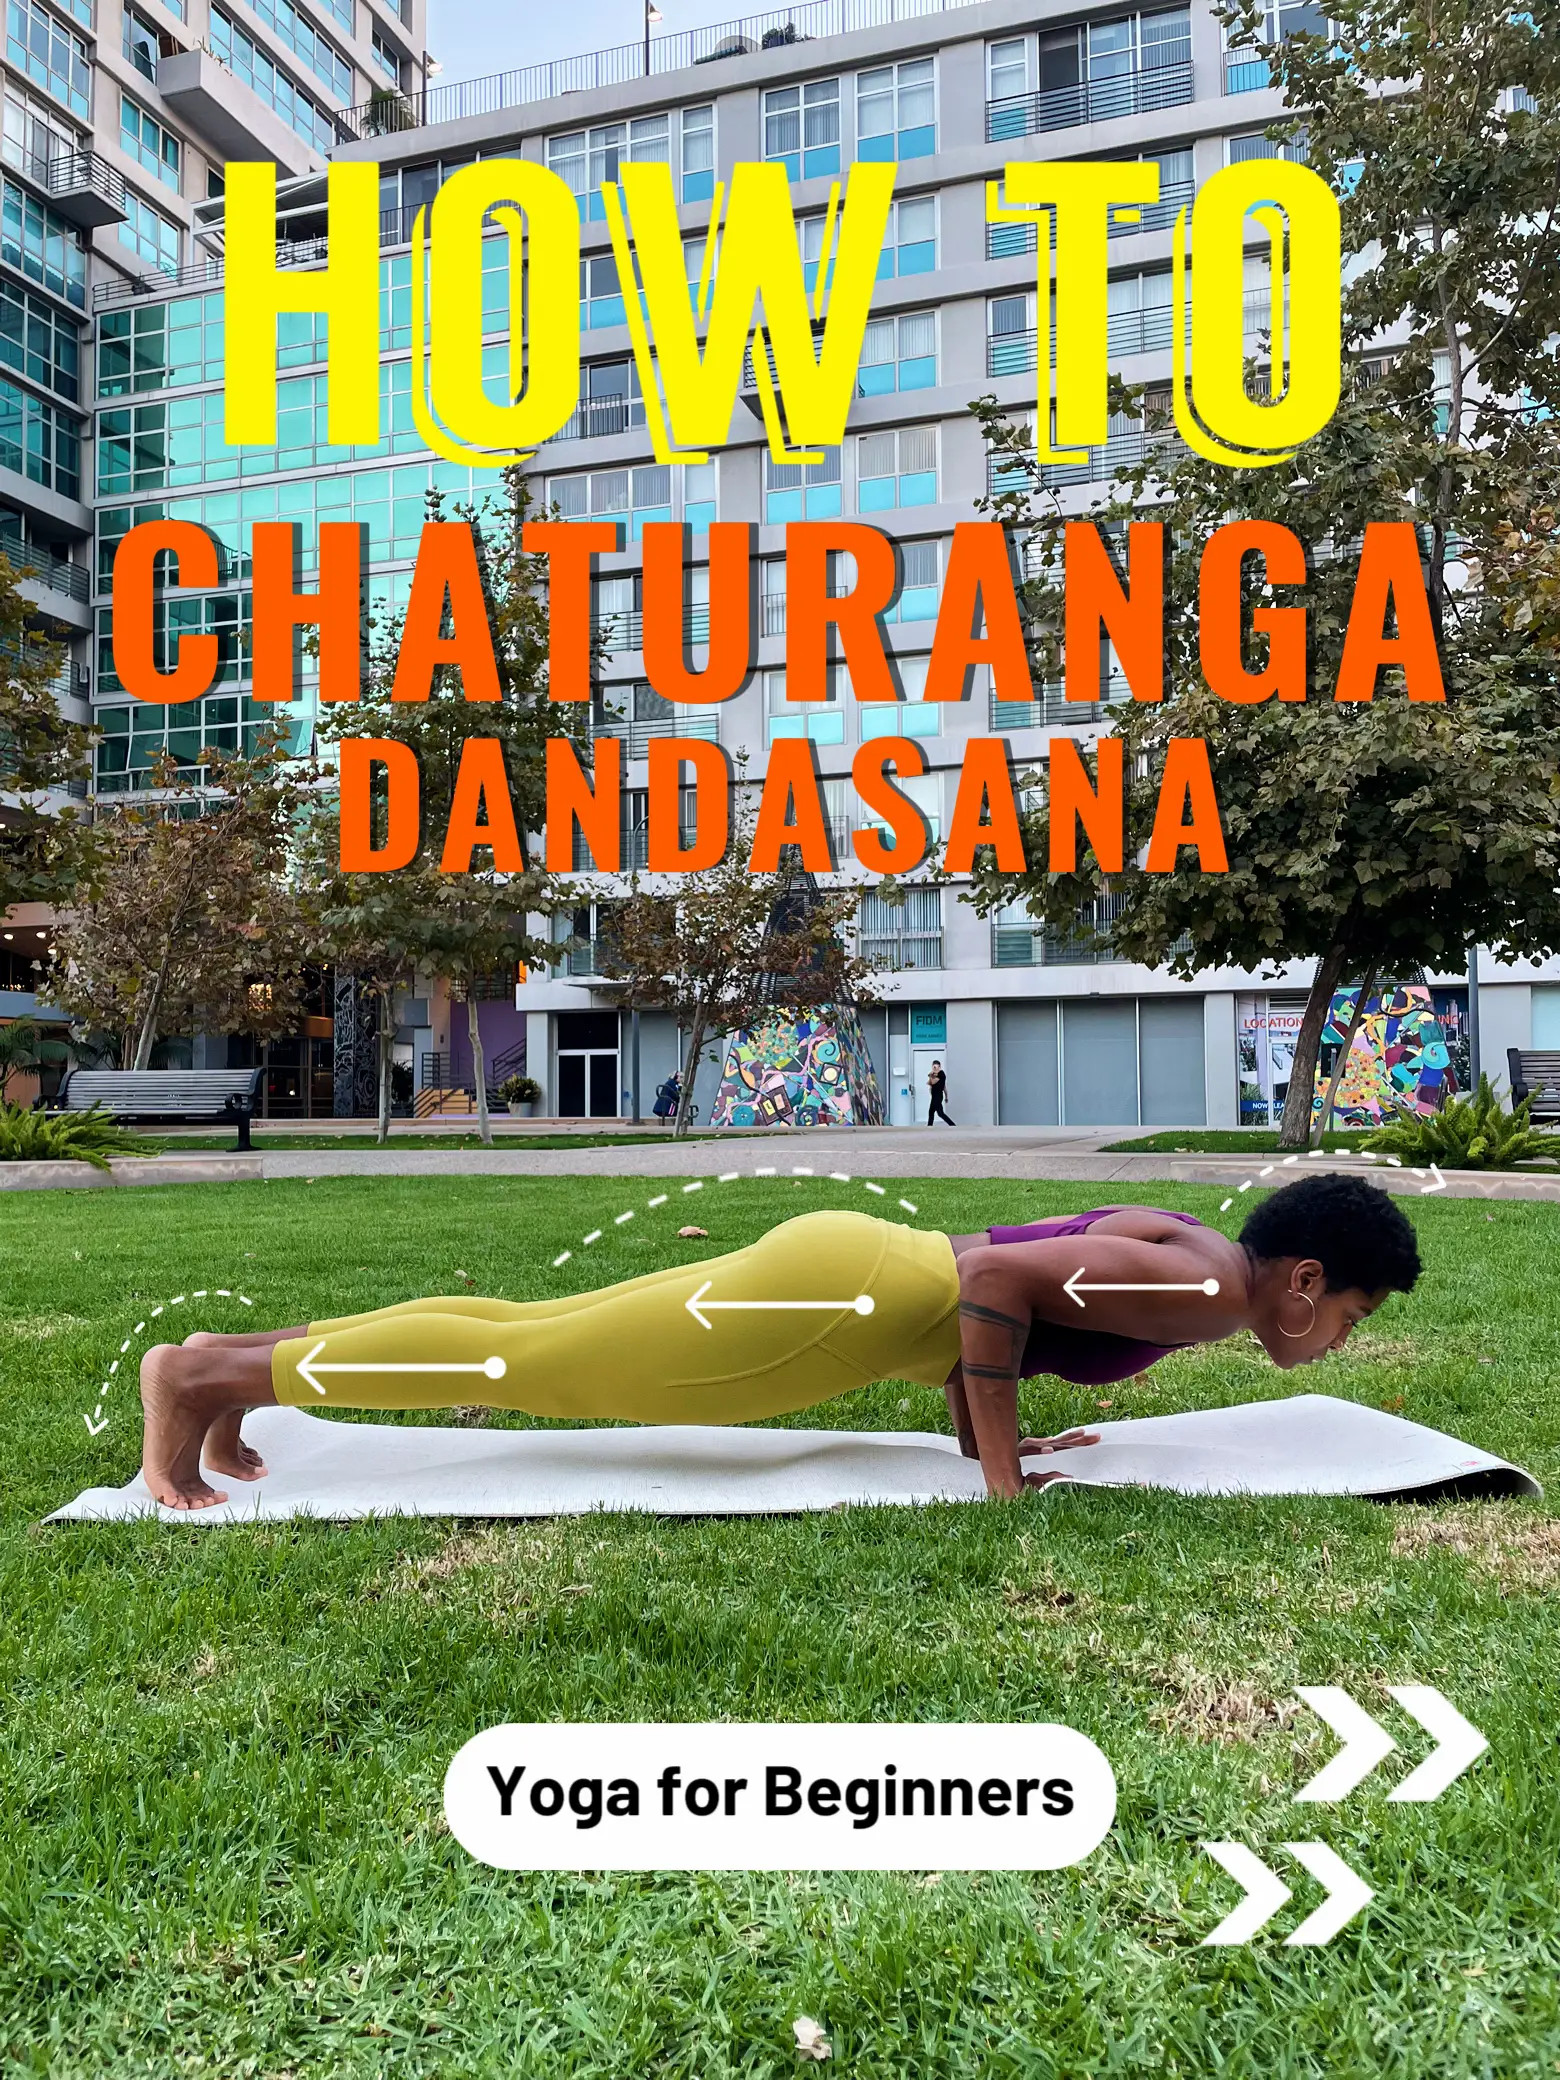 Chaturanga Dandasana: Fun or infuriating? - Teton Yoga Shala